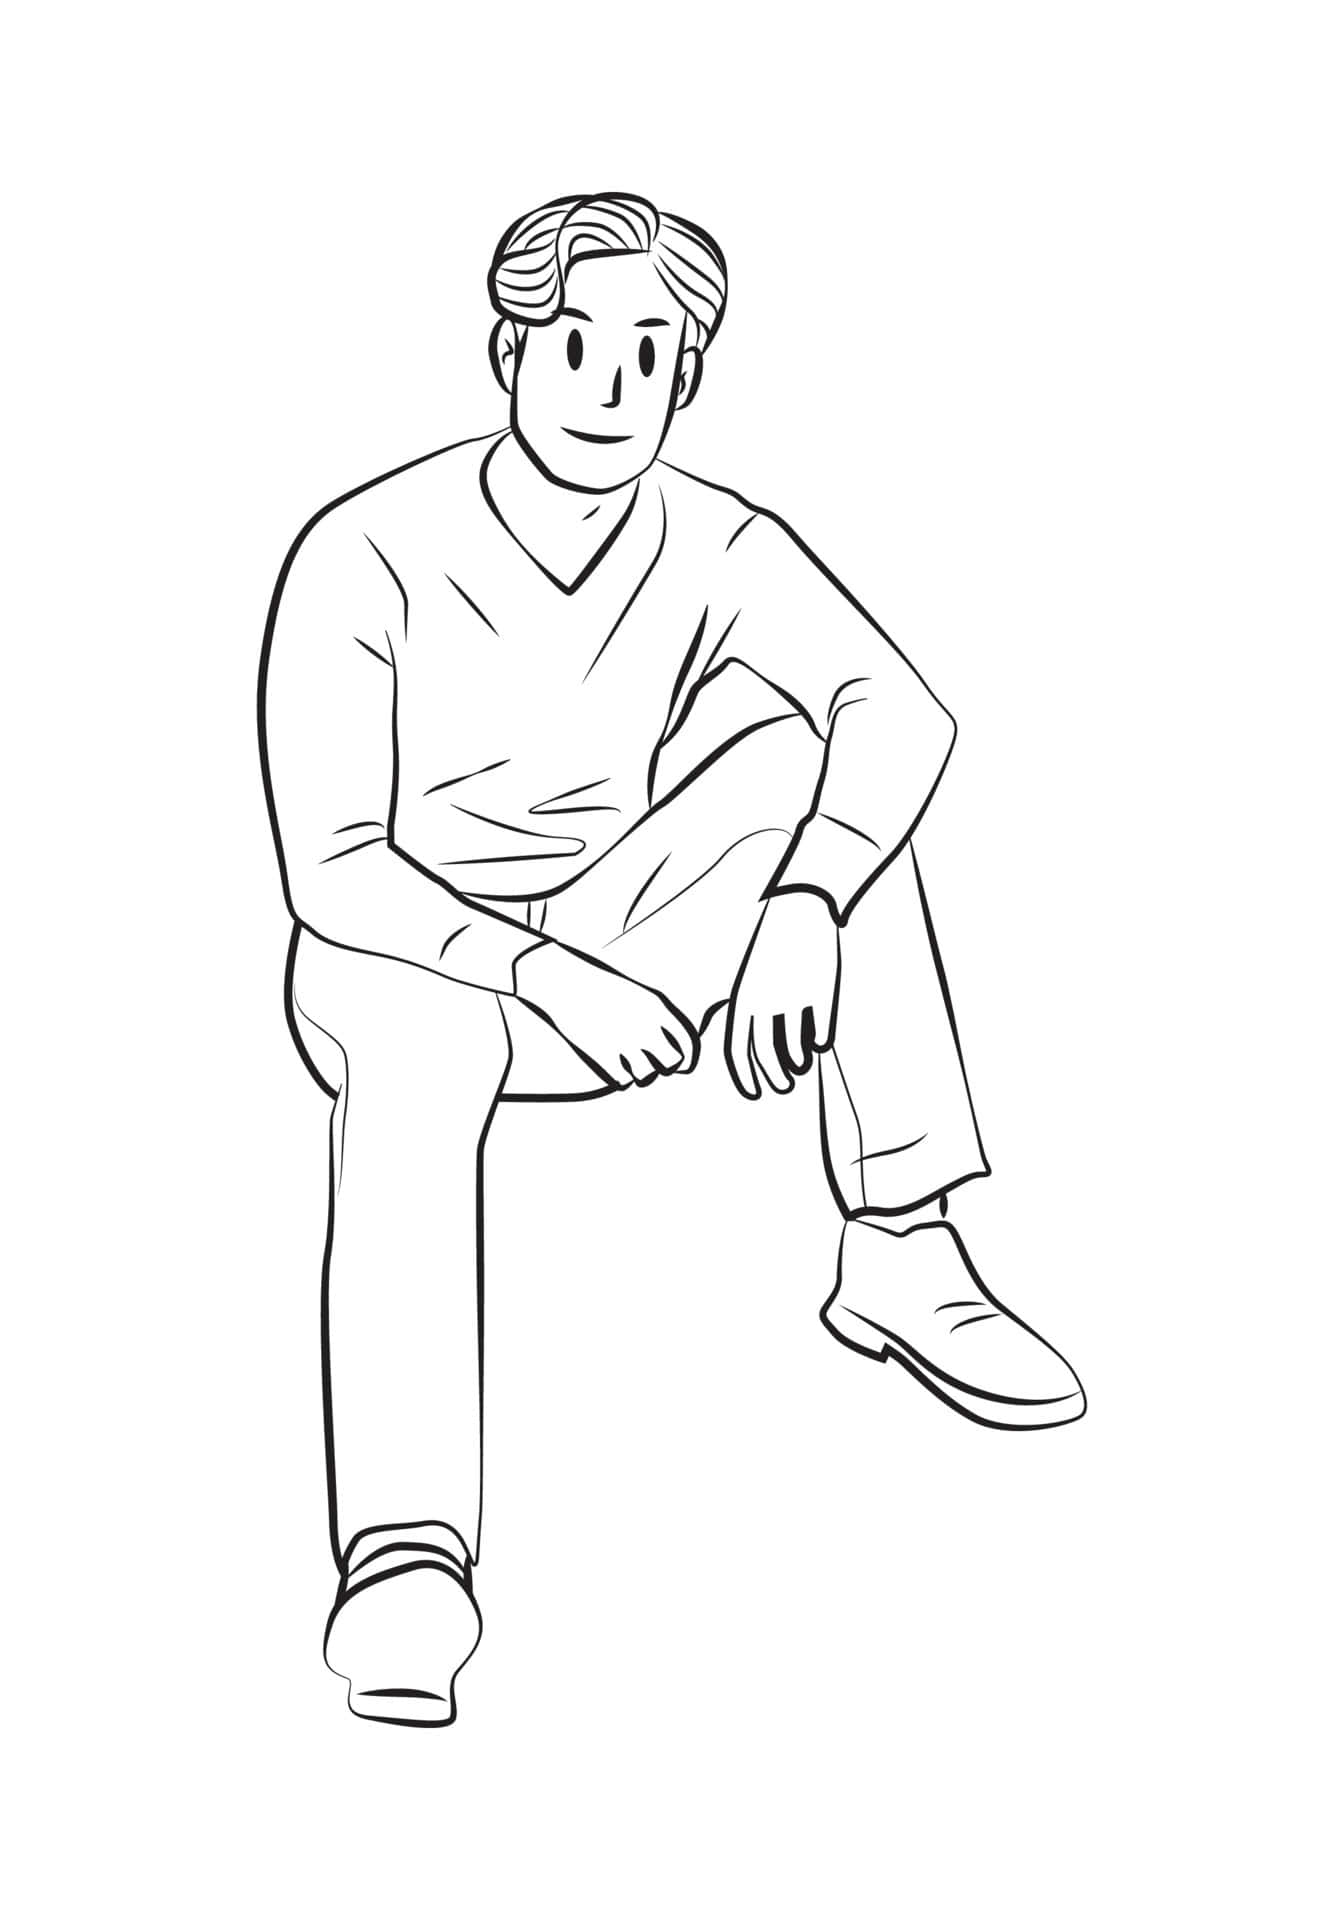 Sitting Pose Man Sketch Picture